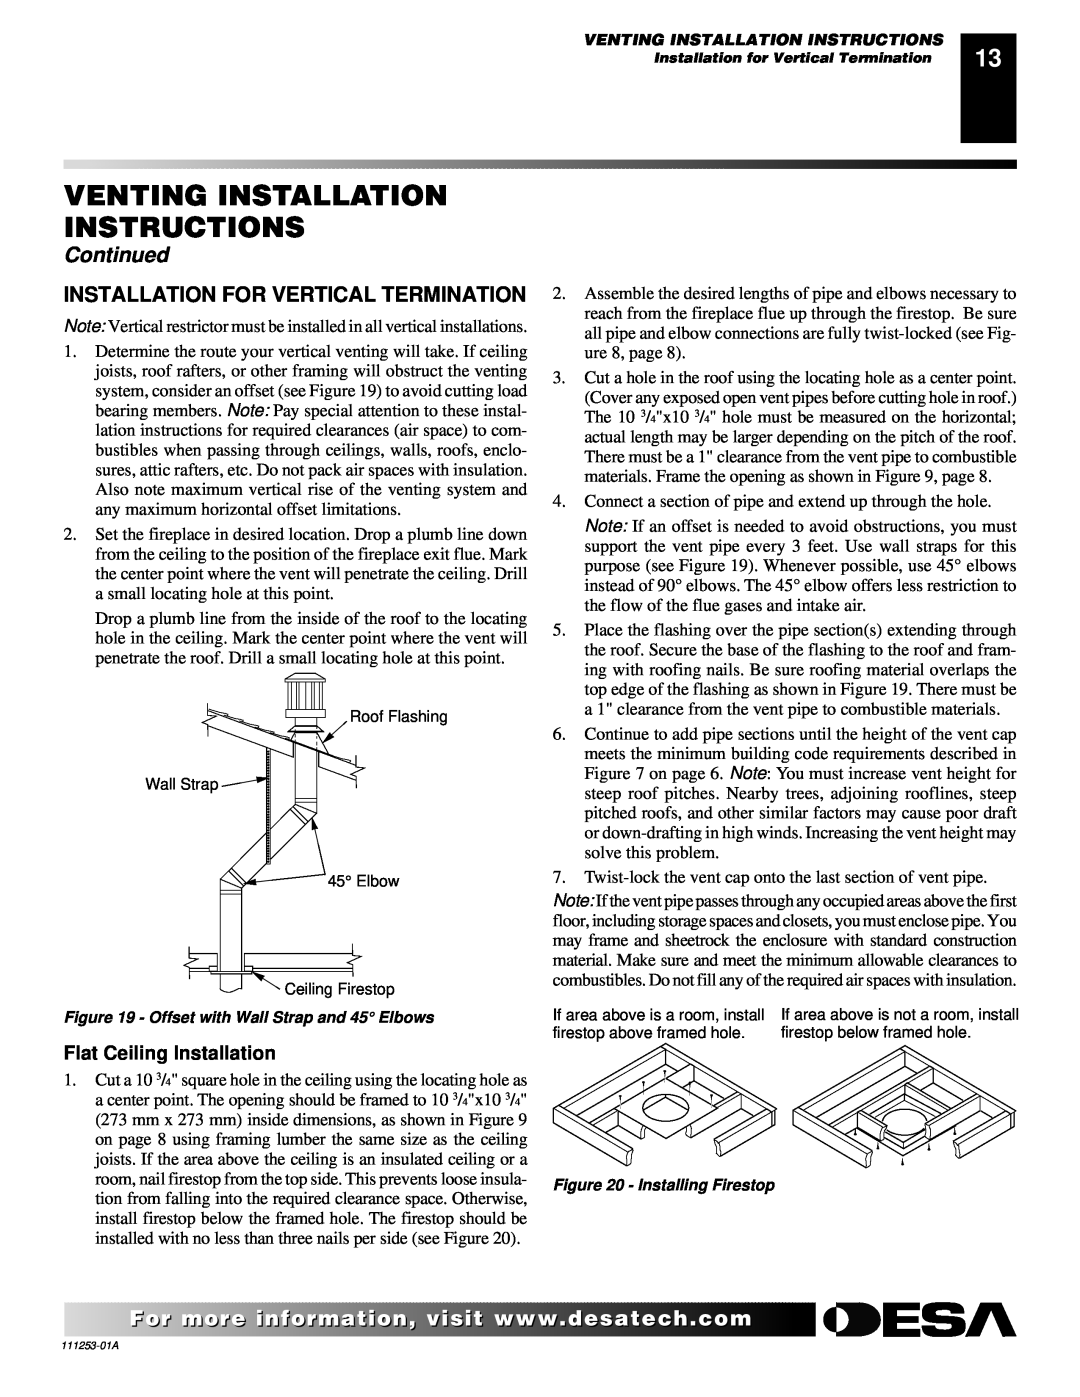 Desa (V)V36EPA(1) Installation For Vertical Termination, Flat Ceiling Installation, Venting Installation Instructions 